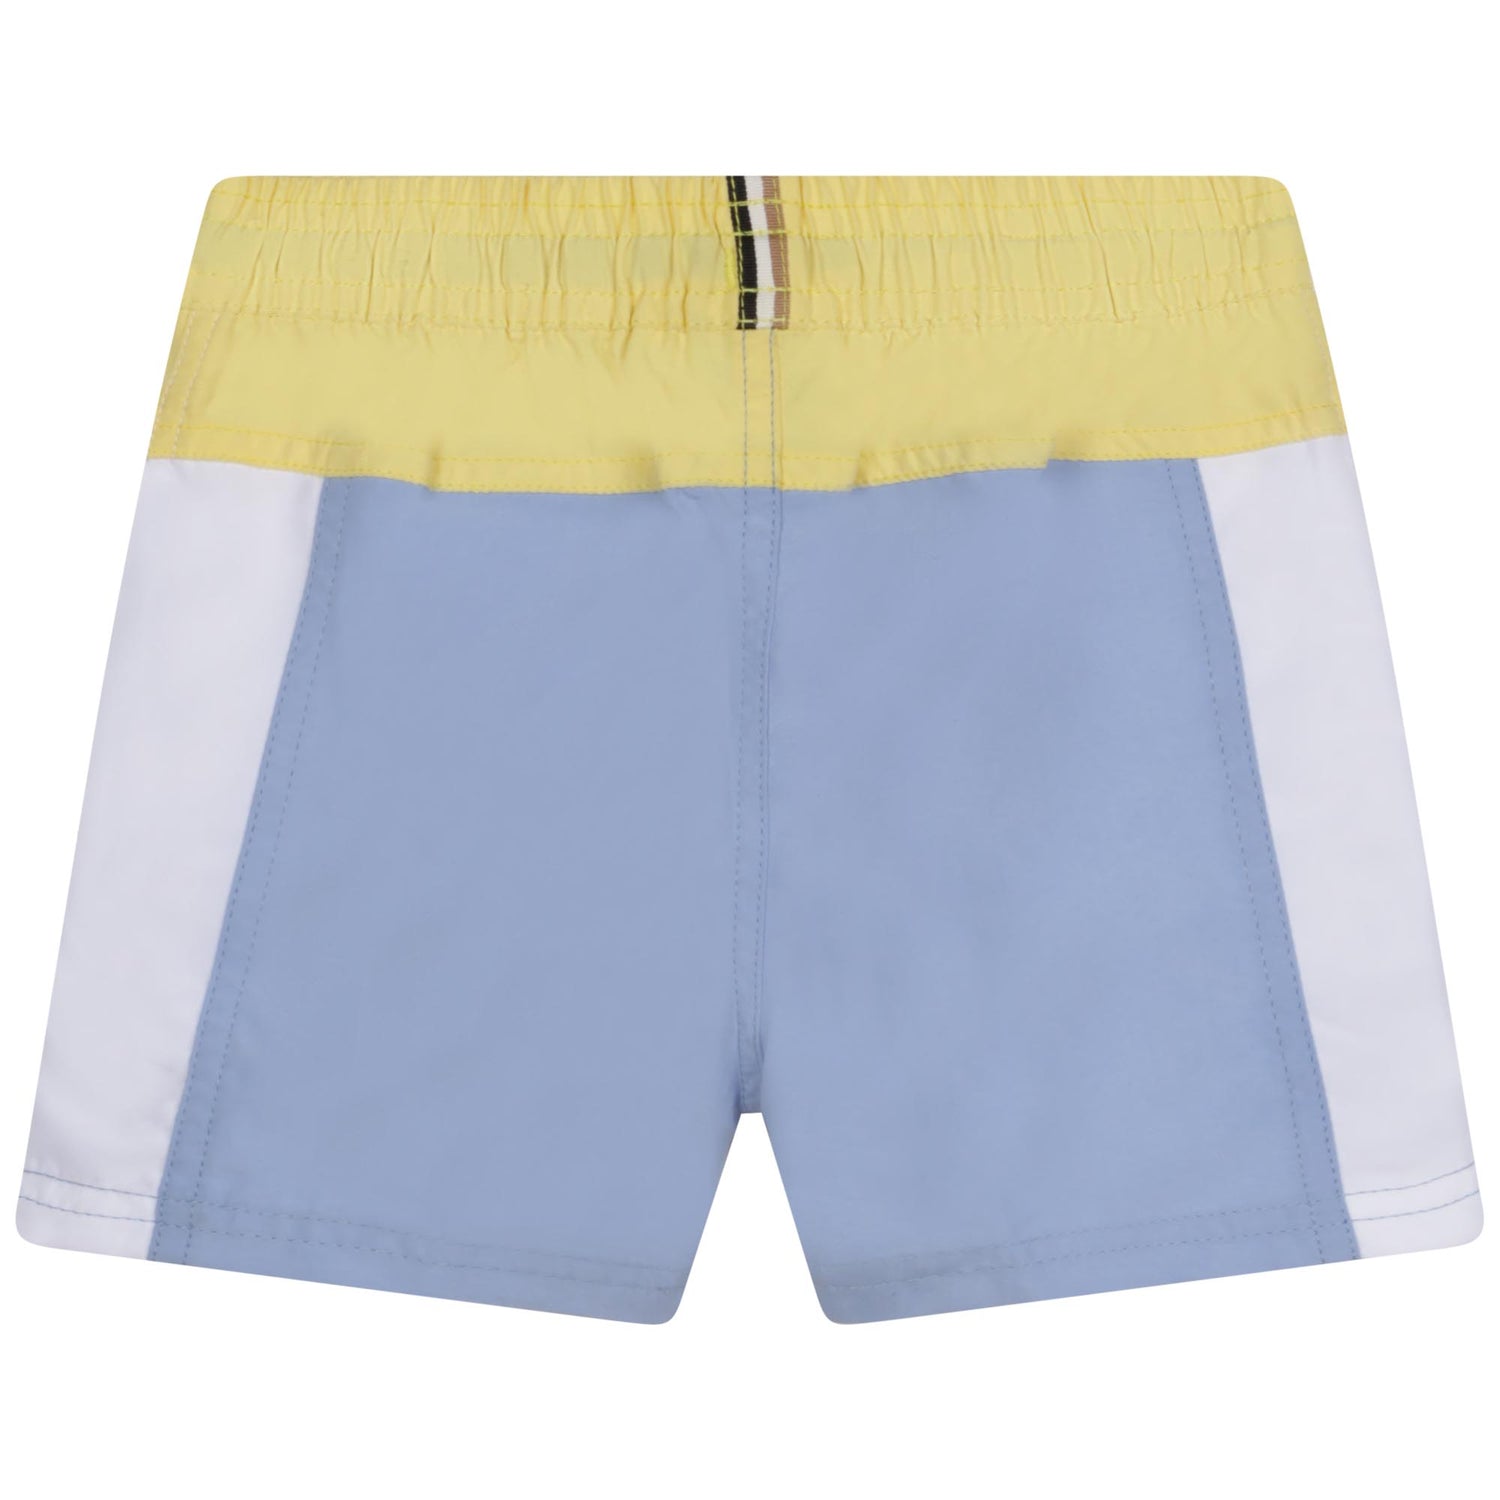 Hugo Boss Swim Shorts Style: J04474